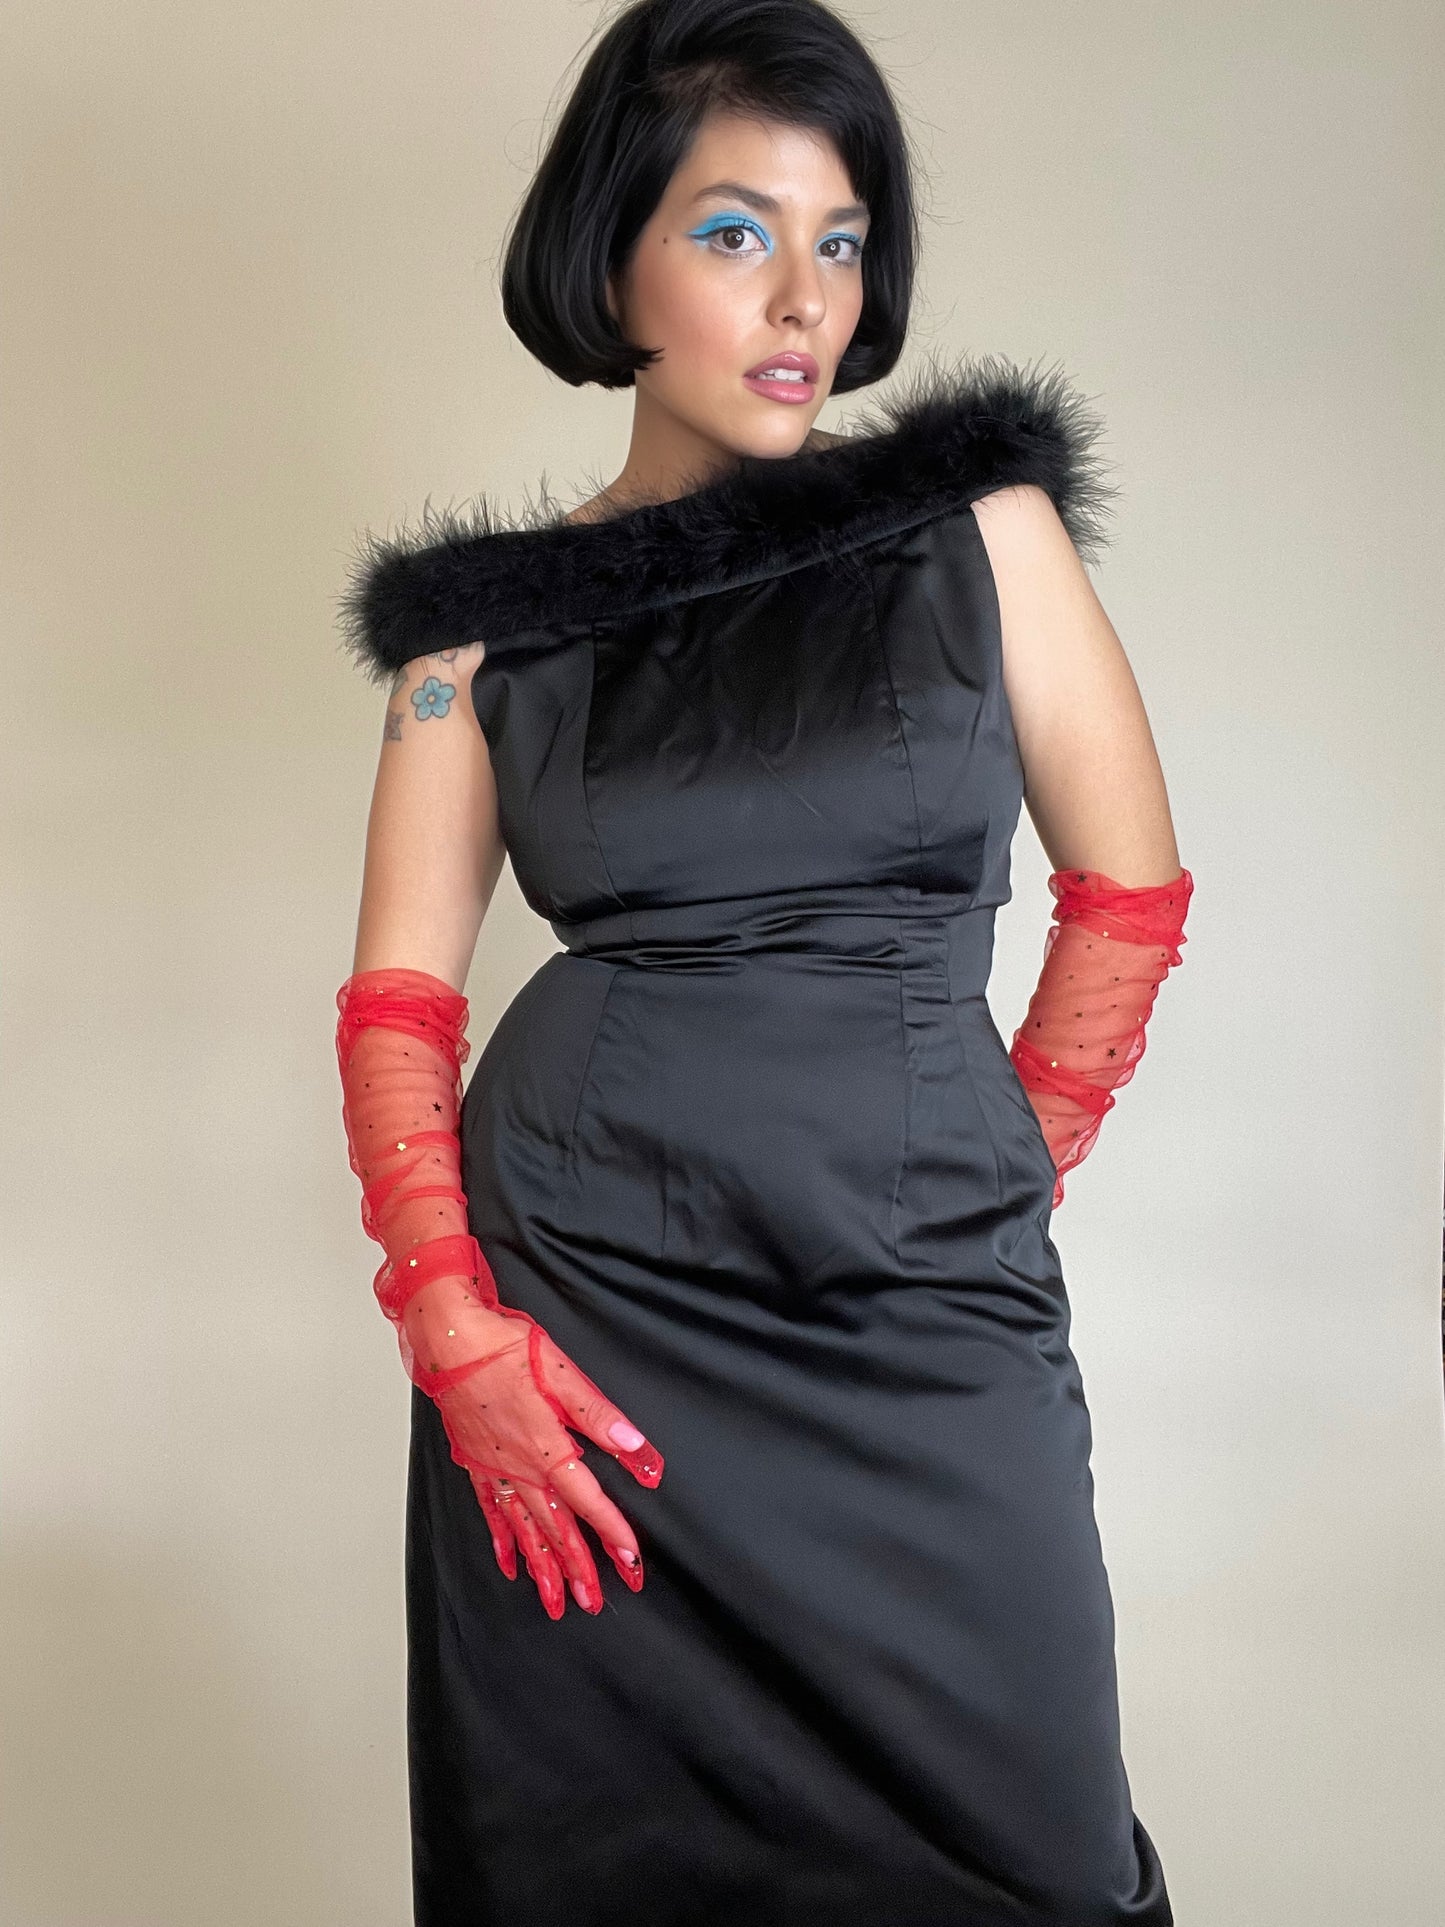 Vintage 50s 60s Couture Black Marabou Feather Wiggle Dress Fits Sizes XXS-S